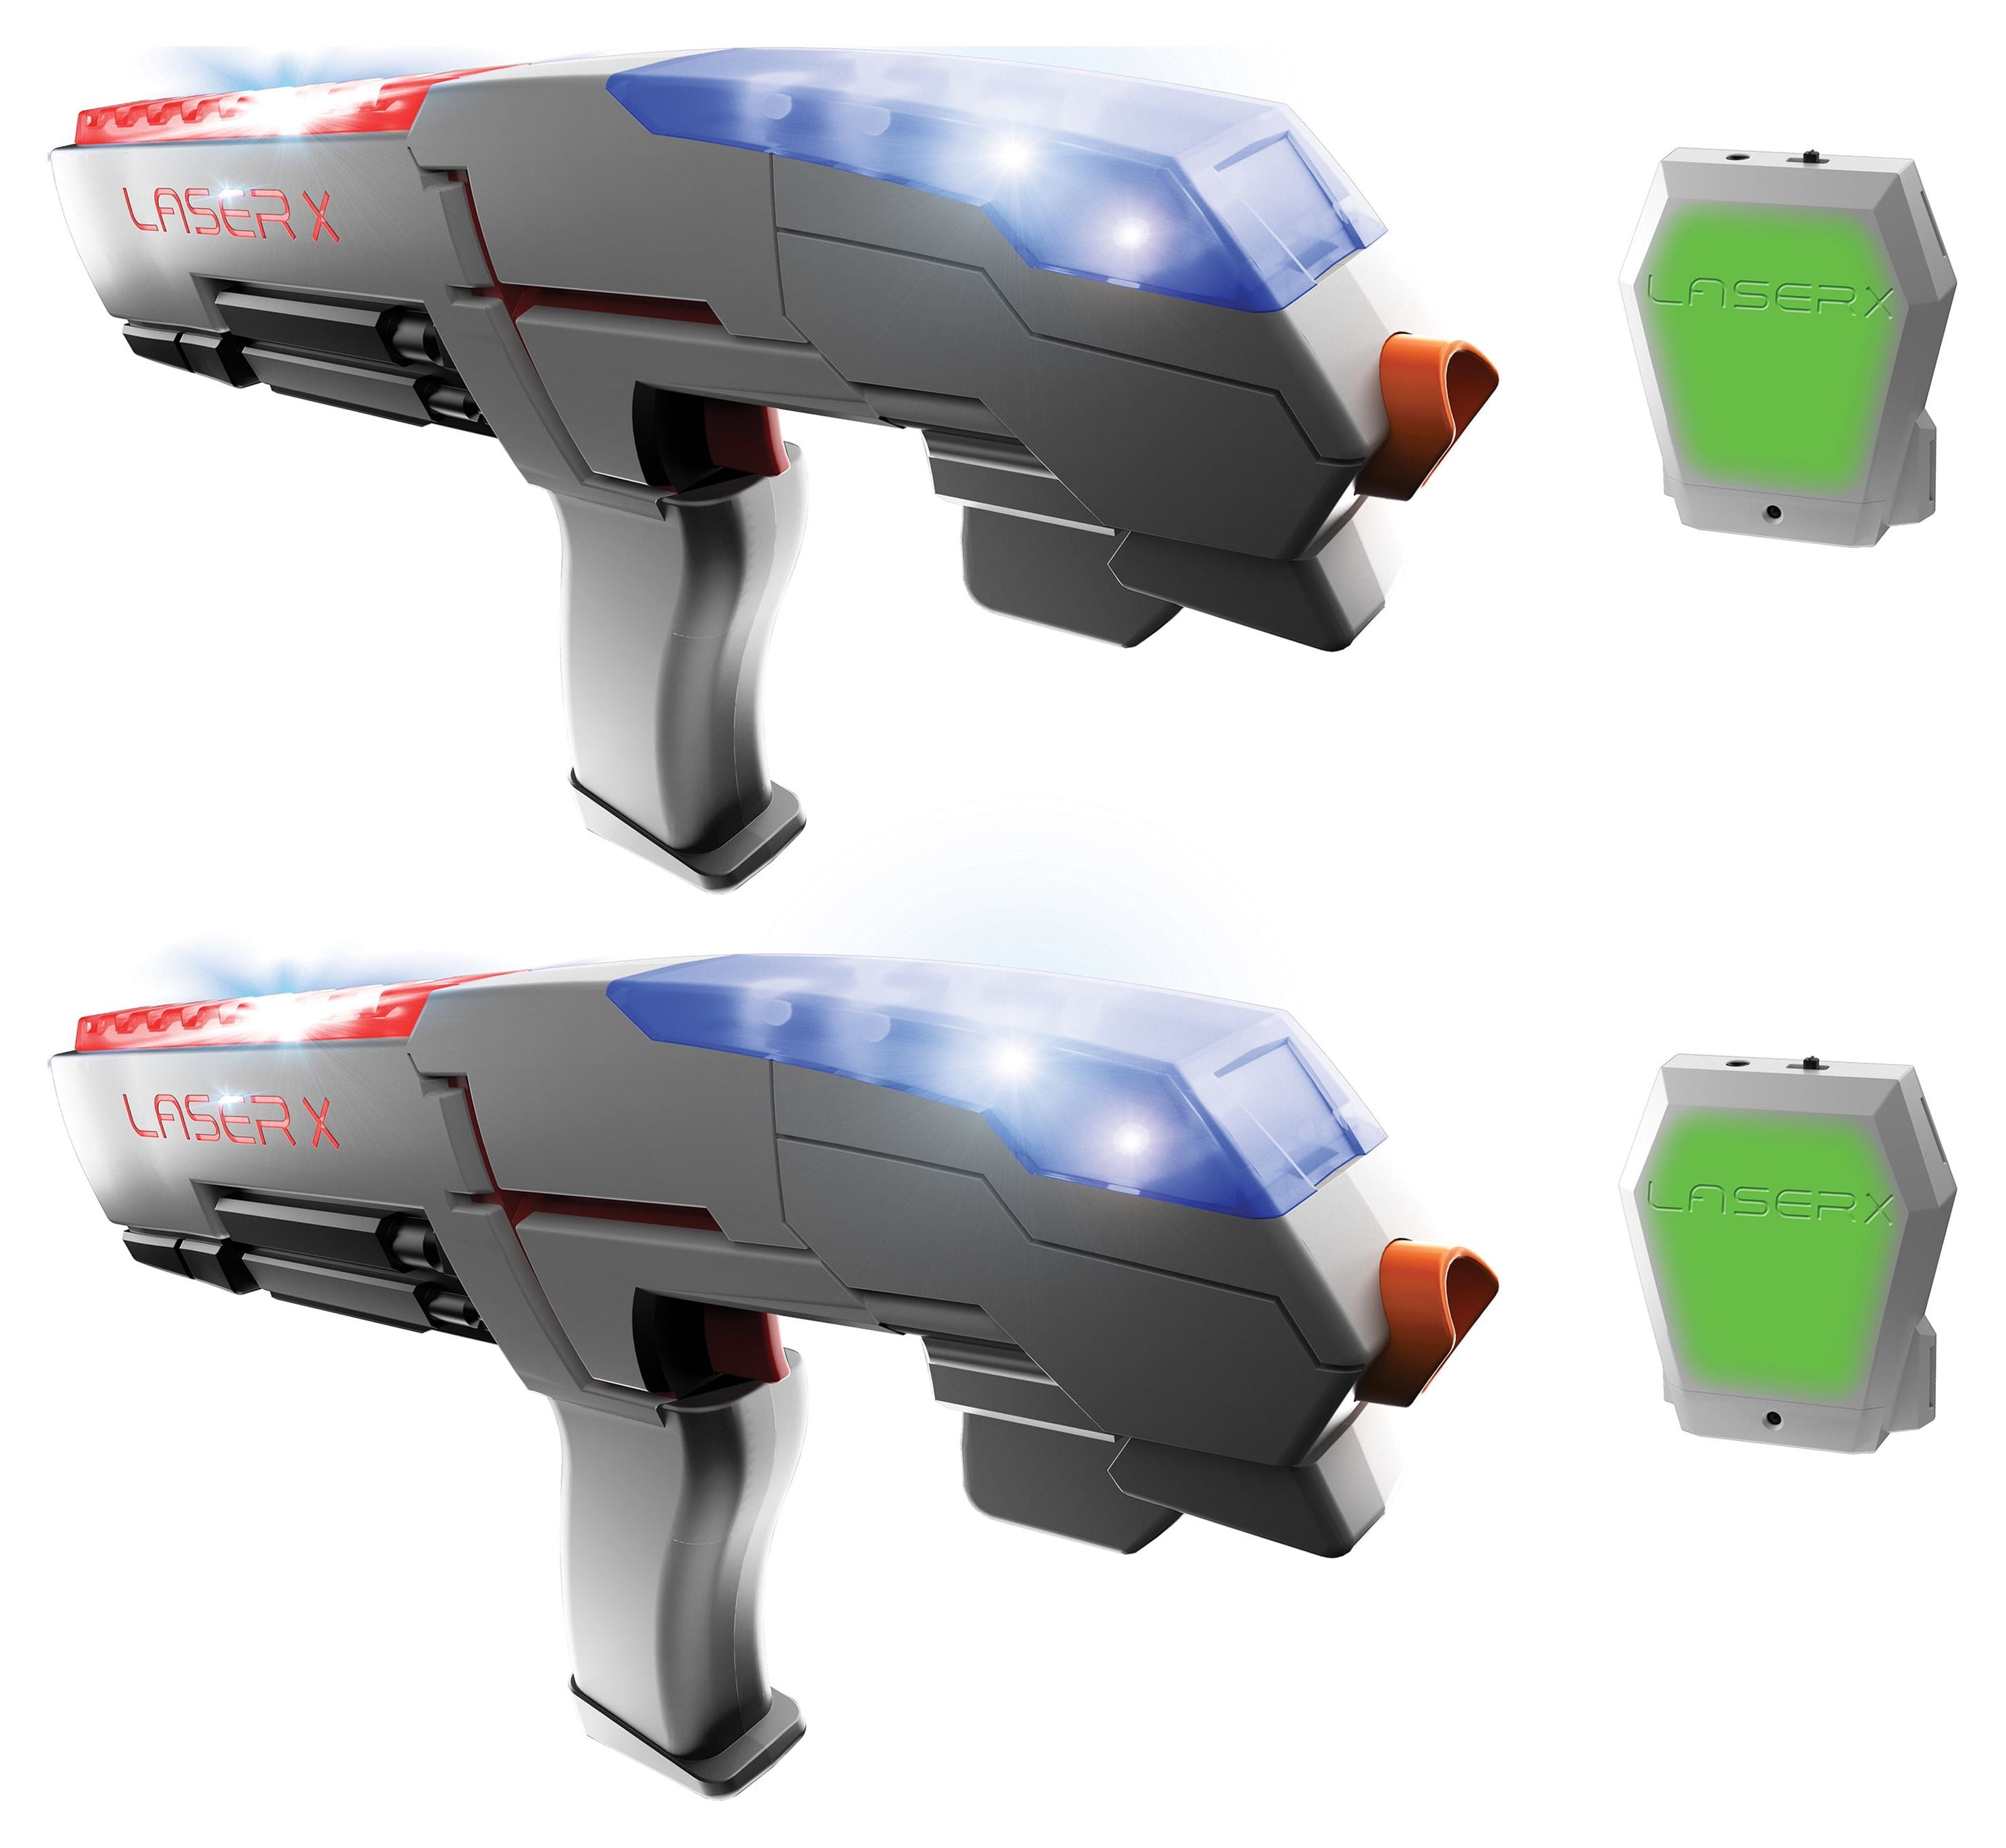 Pistolets Lansay Laser X Double Blaster Evolution Gewehre